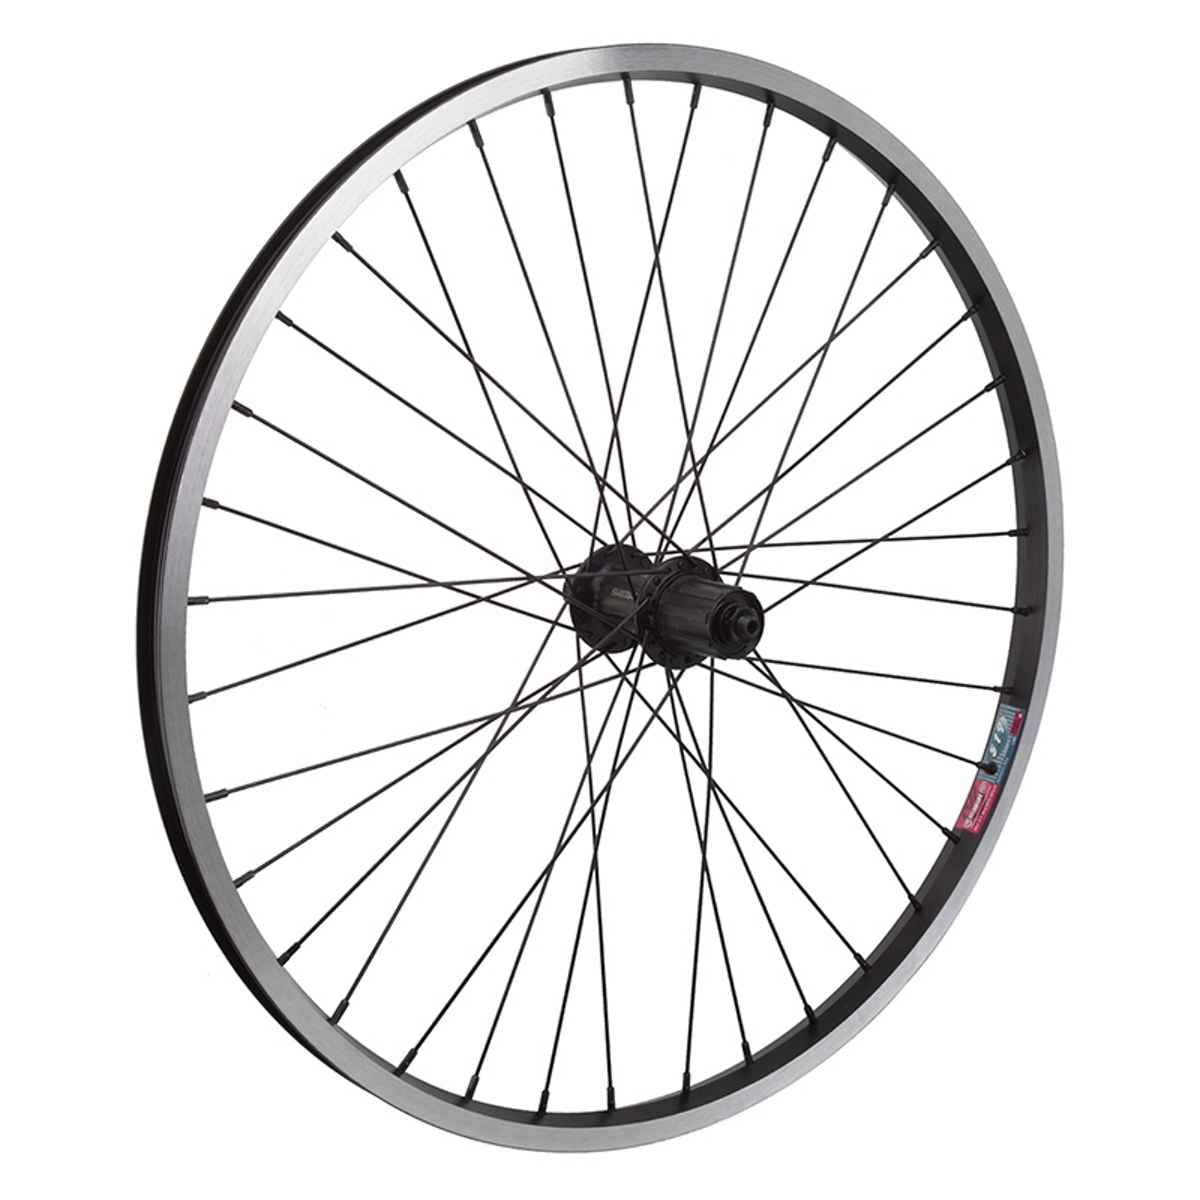 Wheel Master 24x1.75 507x19 Alloy Mountain Bike Rear Bicycle Wheel 8/10s Bicycle 